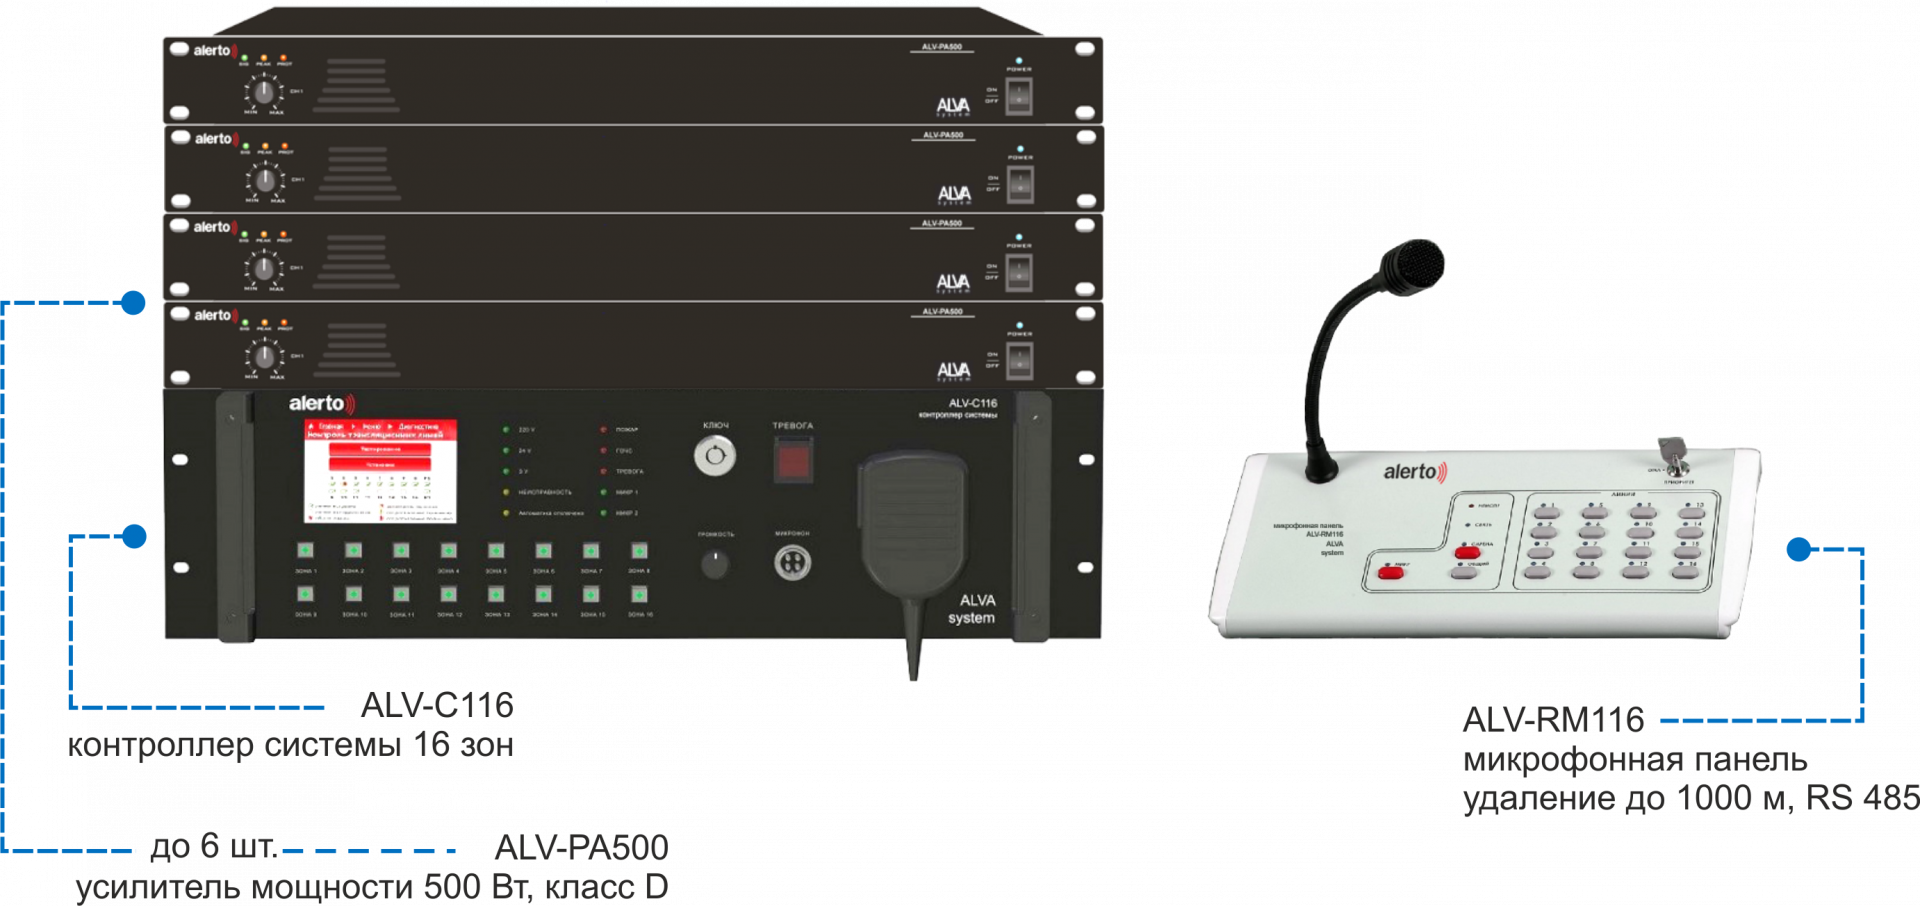 Alerto Voice Alarm System (ALVA system)